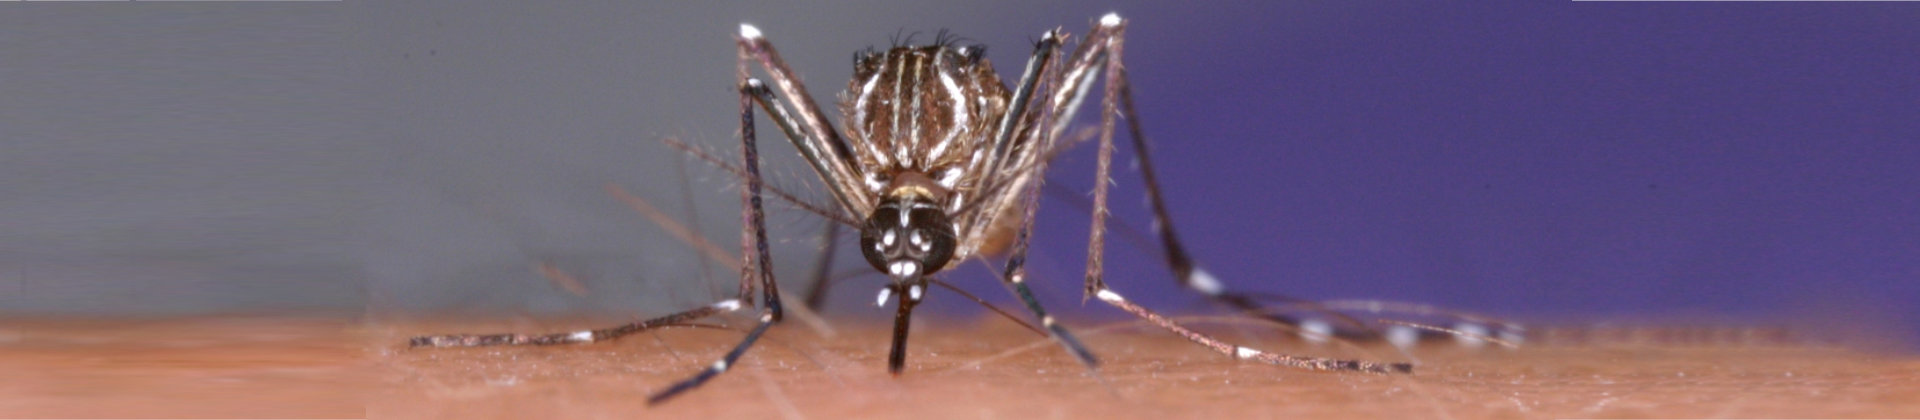 Aedes agypti